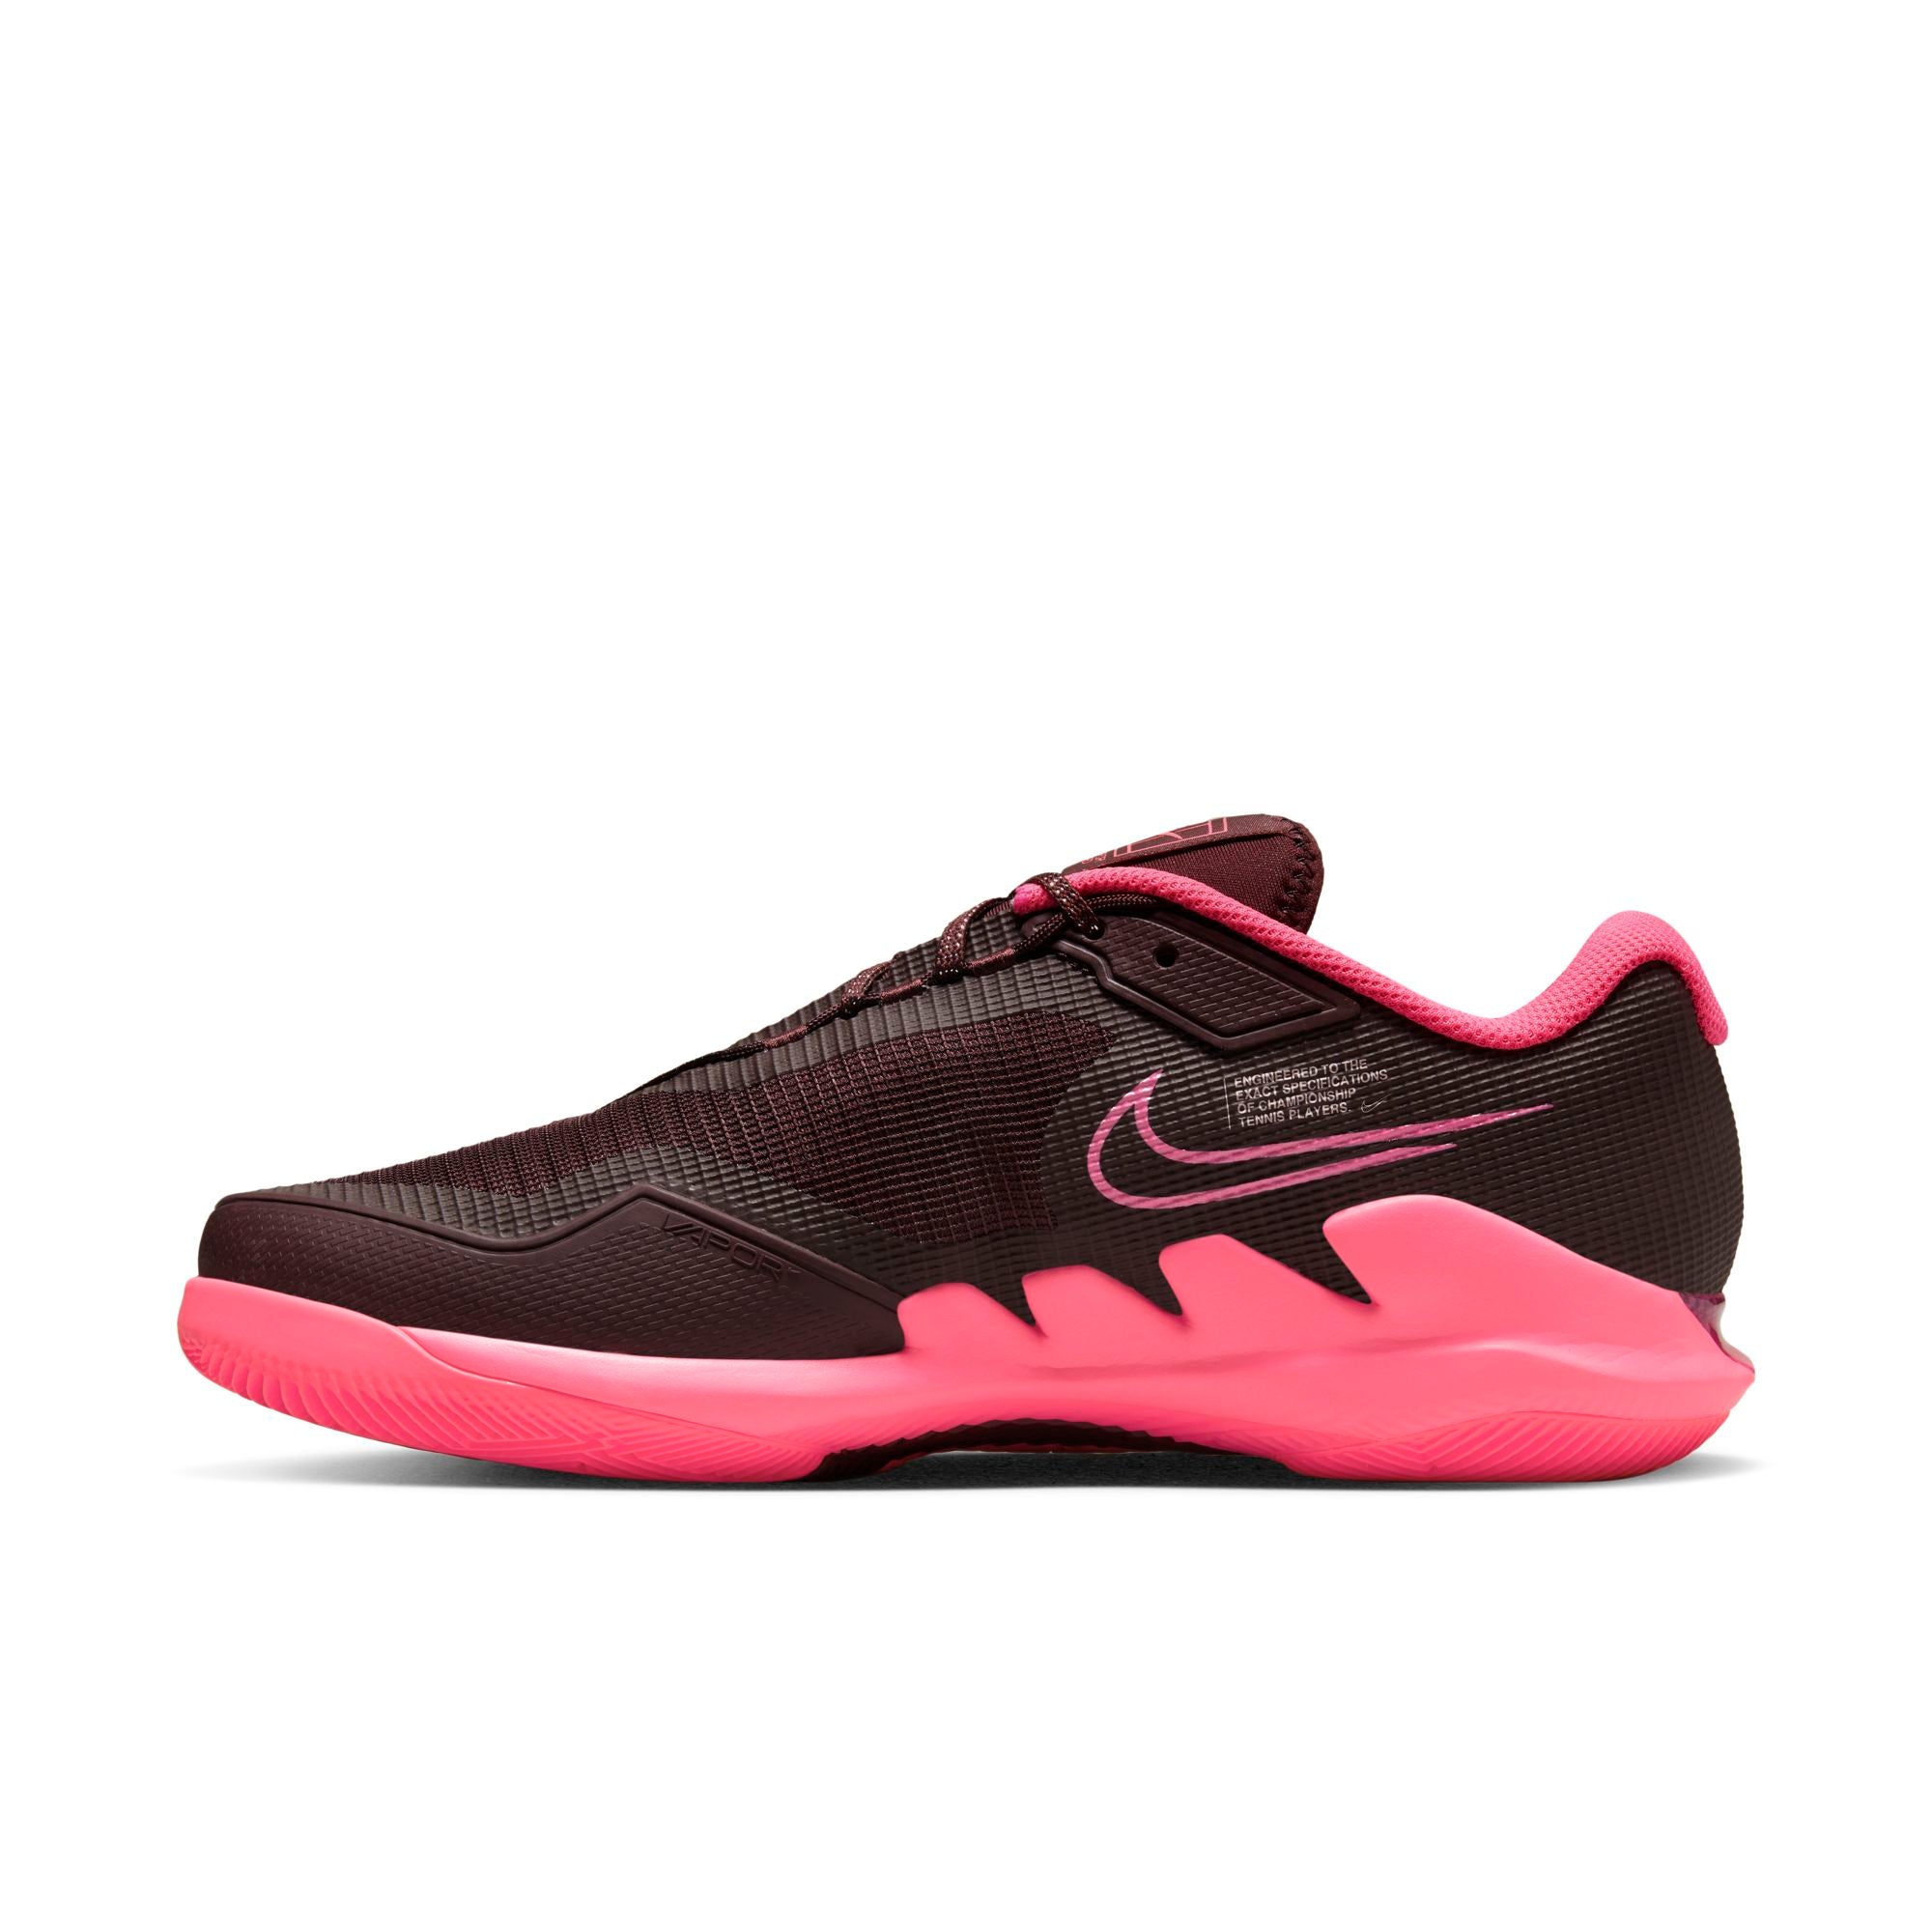 Womens Zoom Vapor Pro Tennis Shoe